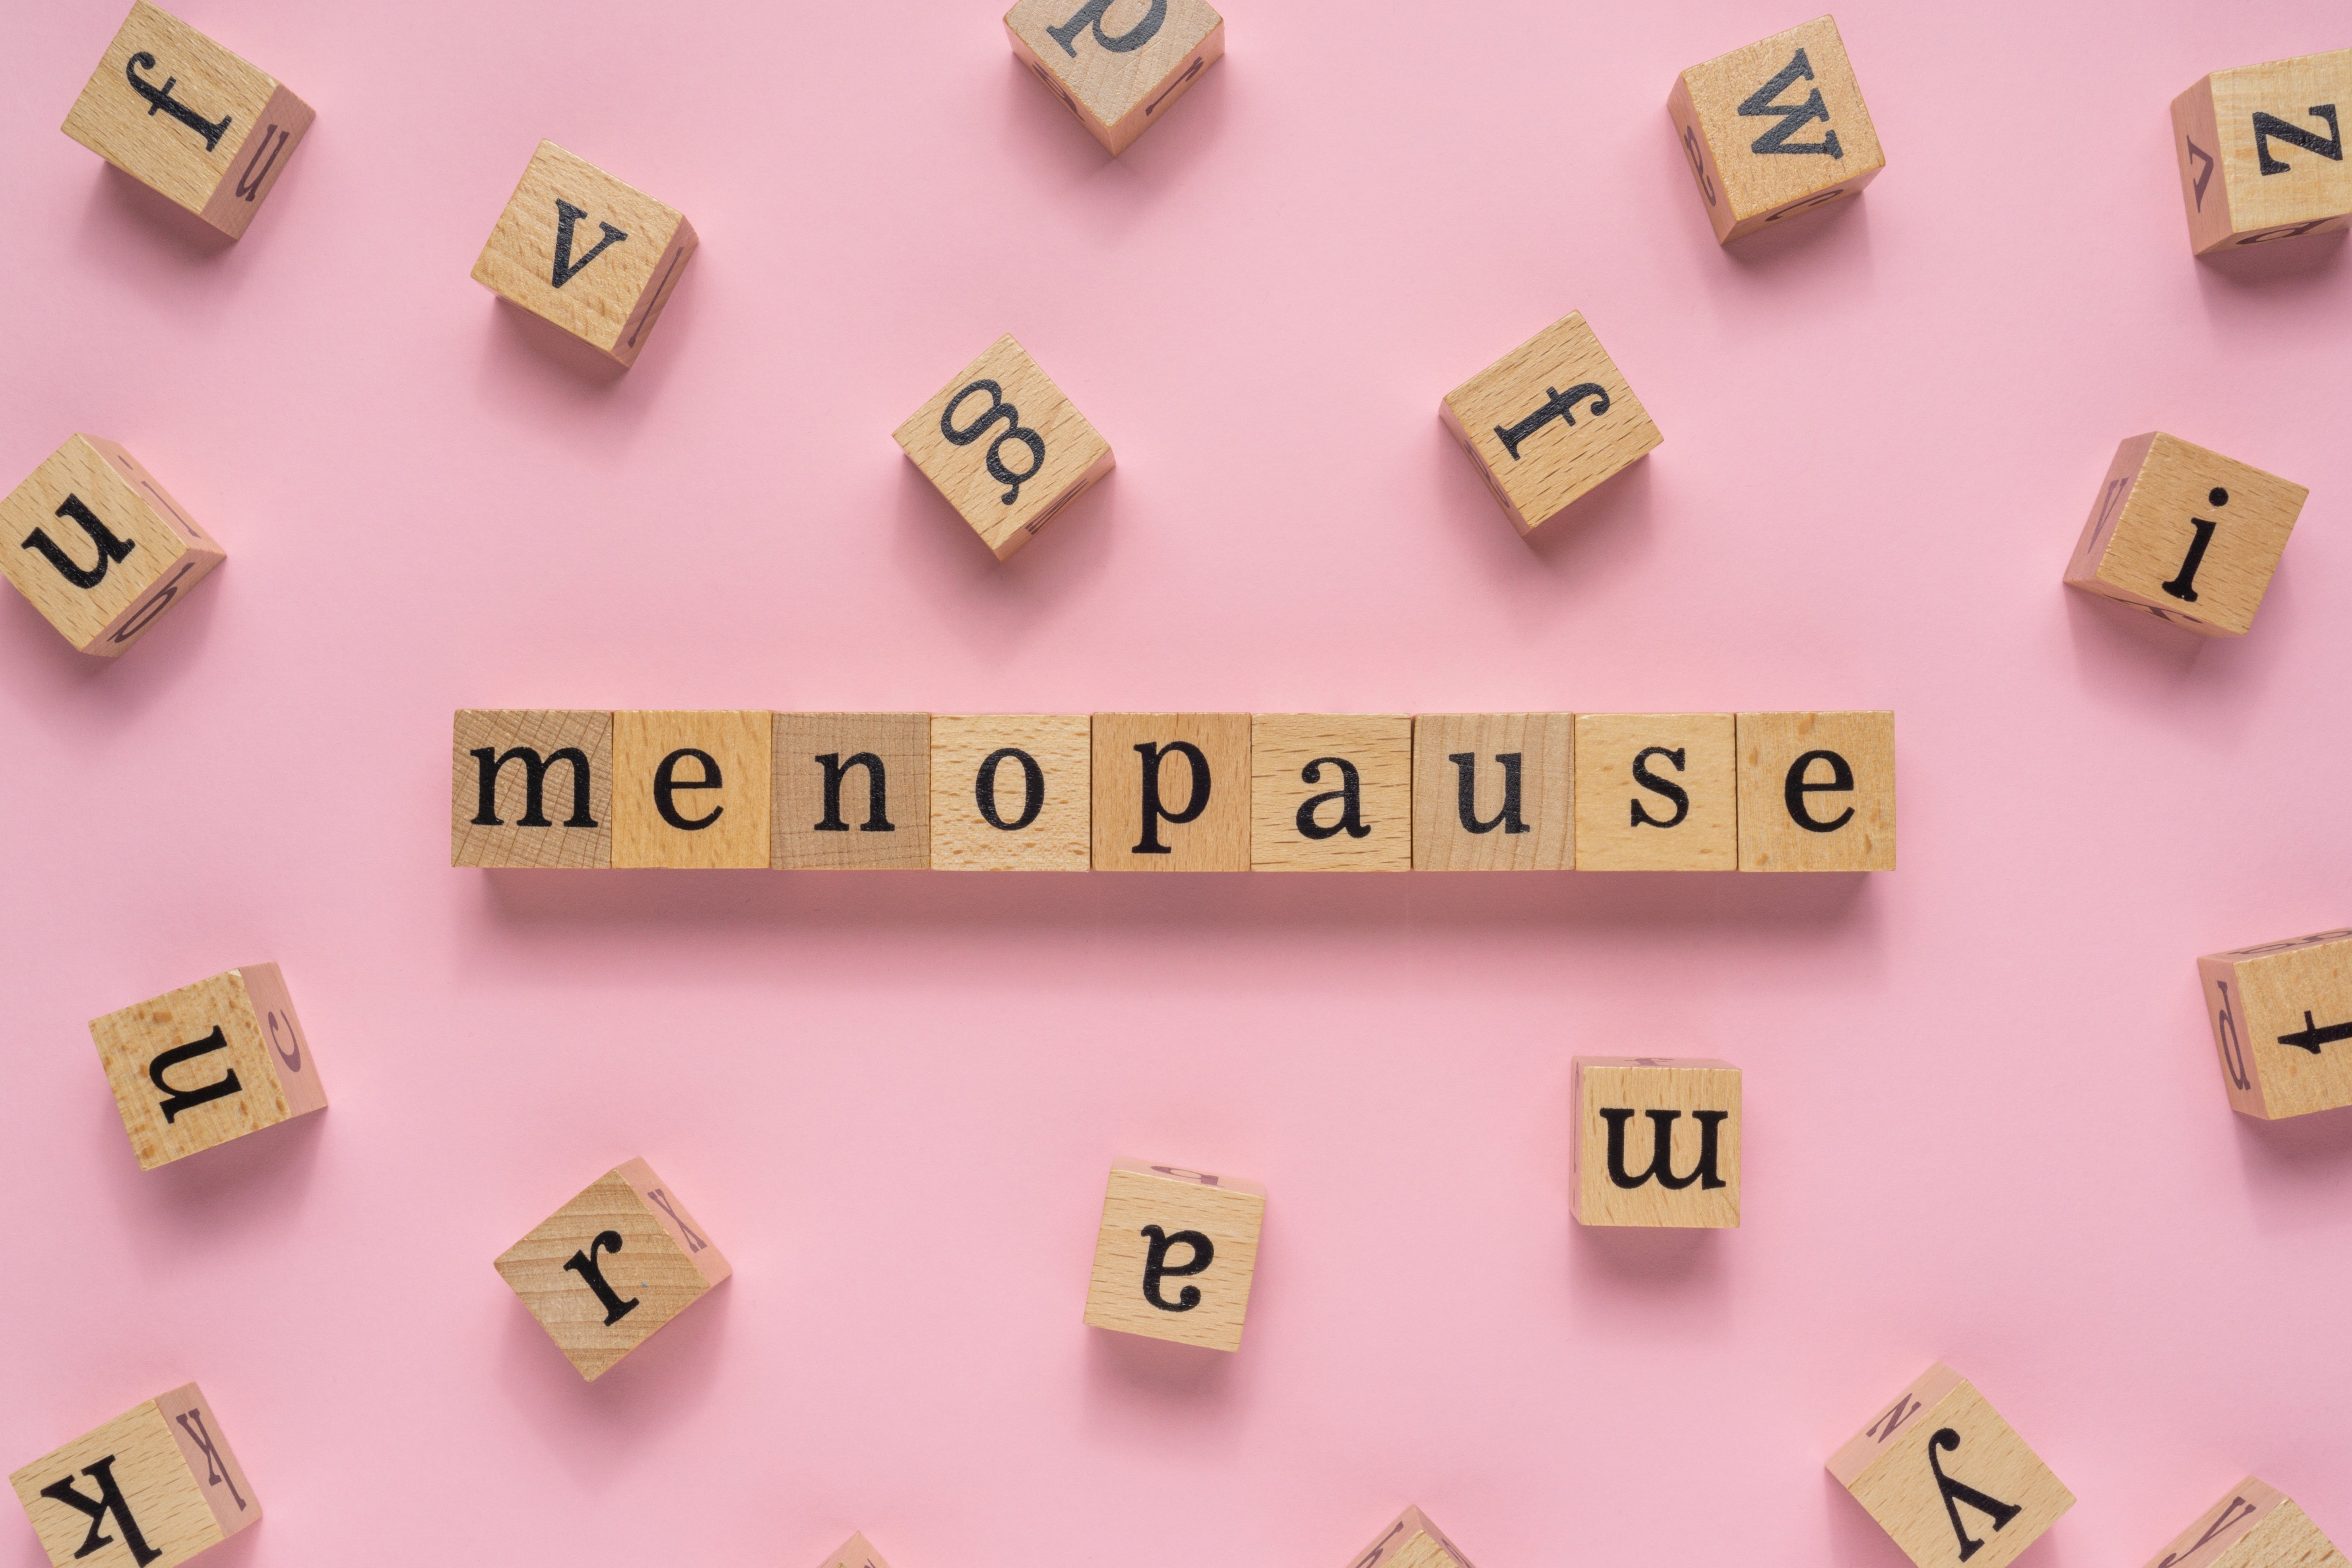 menopause spelled out on letter blocks